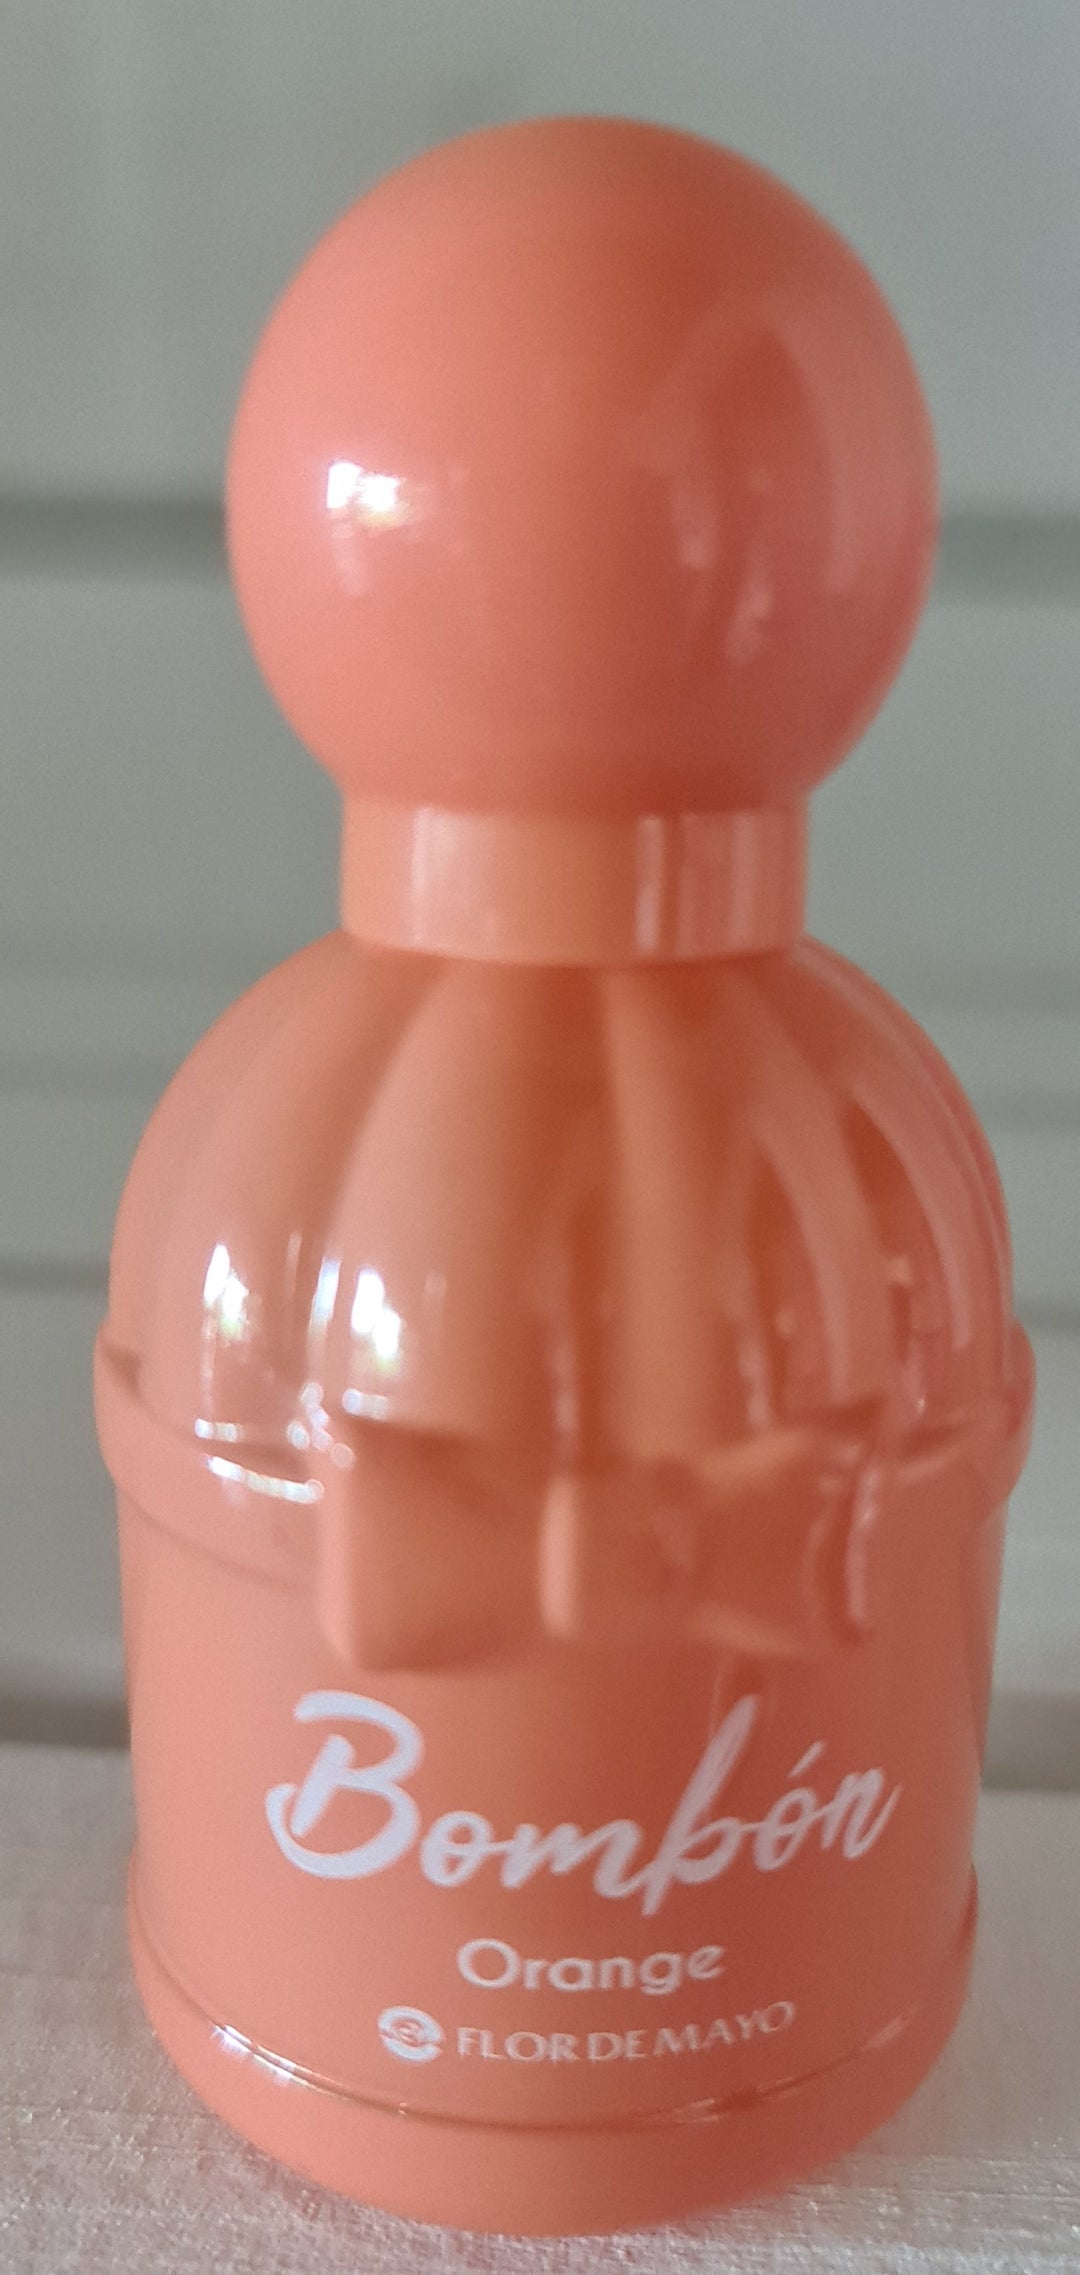 Bombon Miniparfum "Orange" Eau de Toilette, 20 ml - British Moments / Fernweh-Kaufhaus